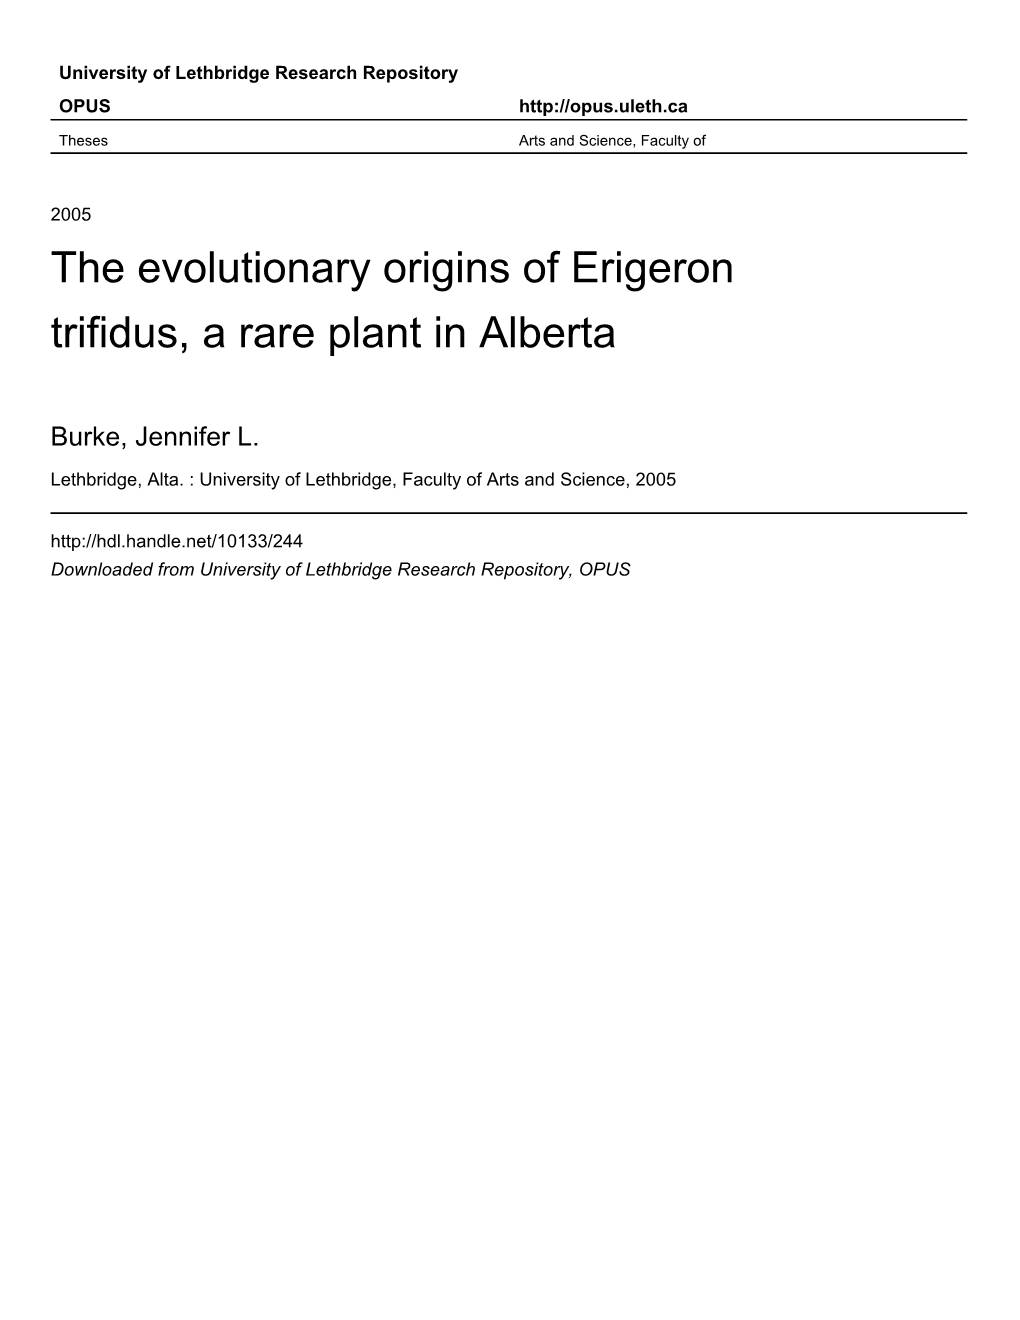 The Evolutionary Origins of Erigeron Trifidus, a Rare Plant in Alberta